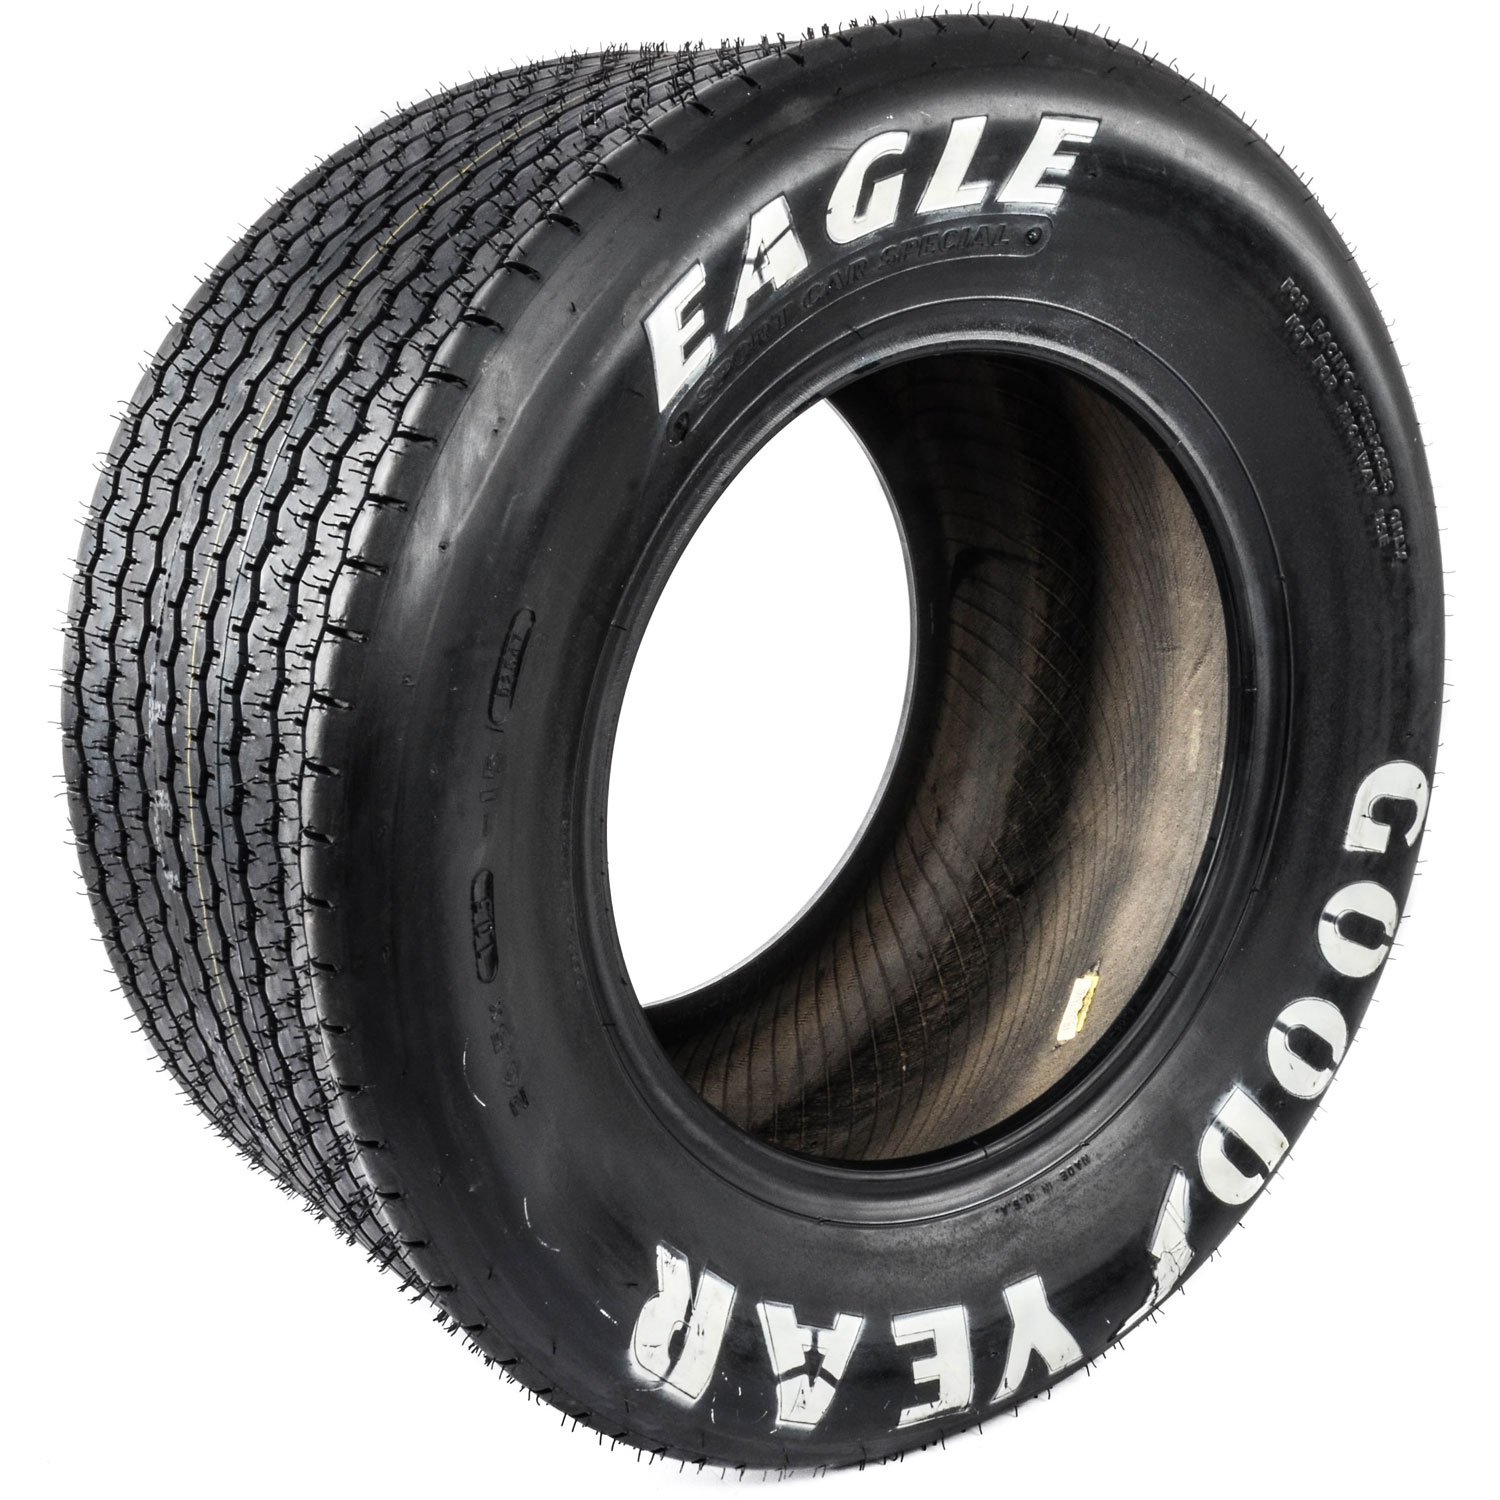 Vintage Sportscar Eagle Cobra Tire Bias Ply [26.5 x 10.0-15]